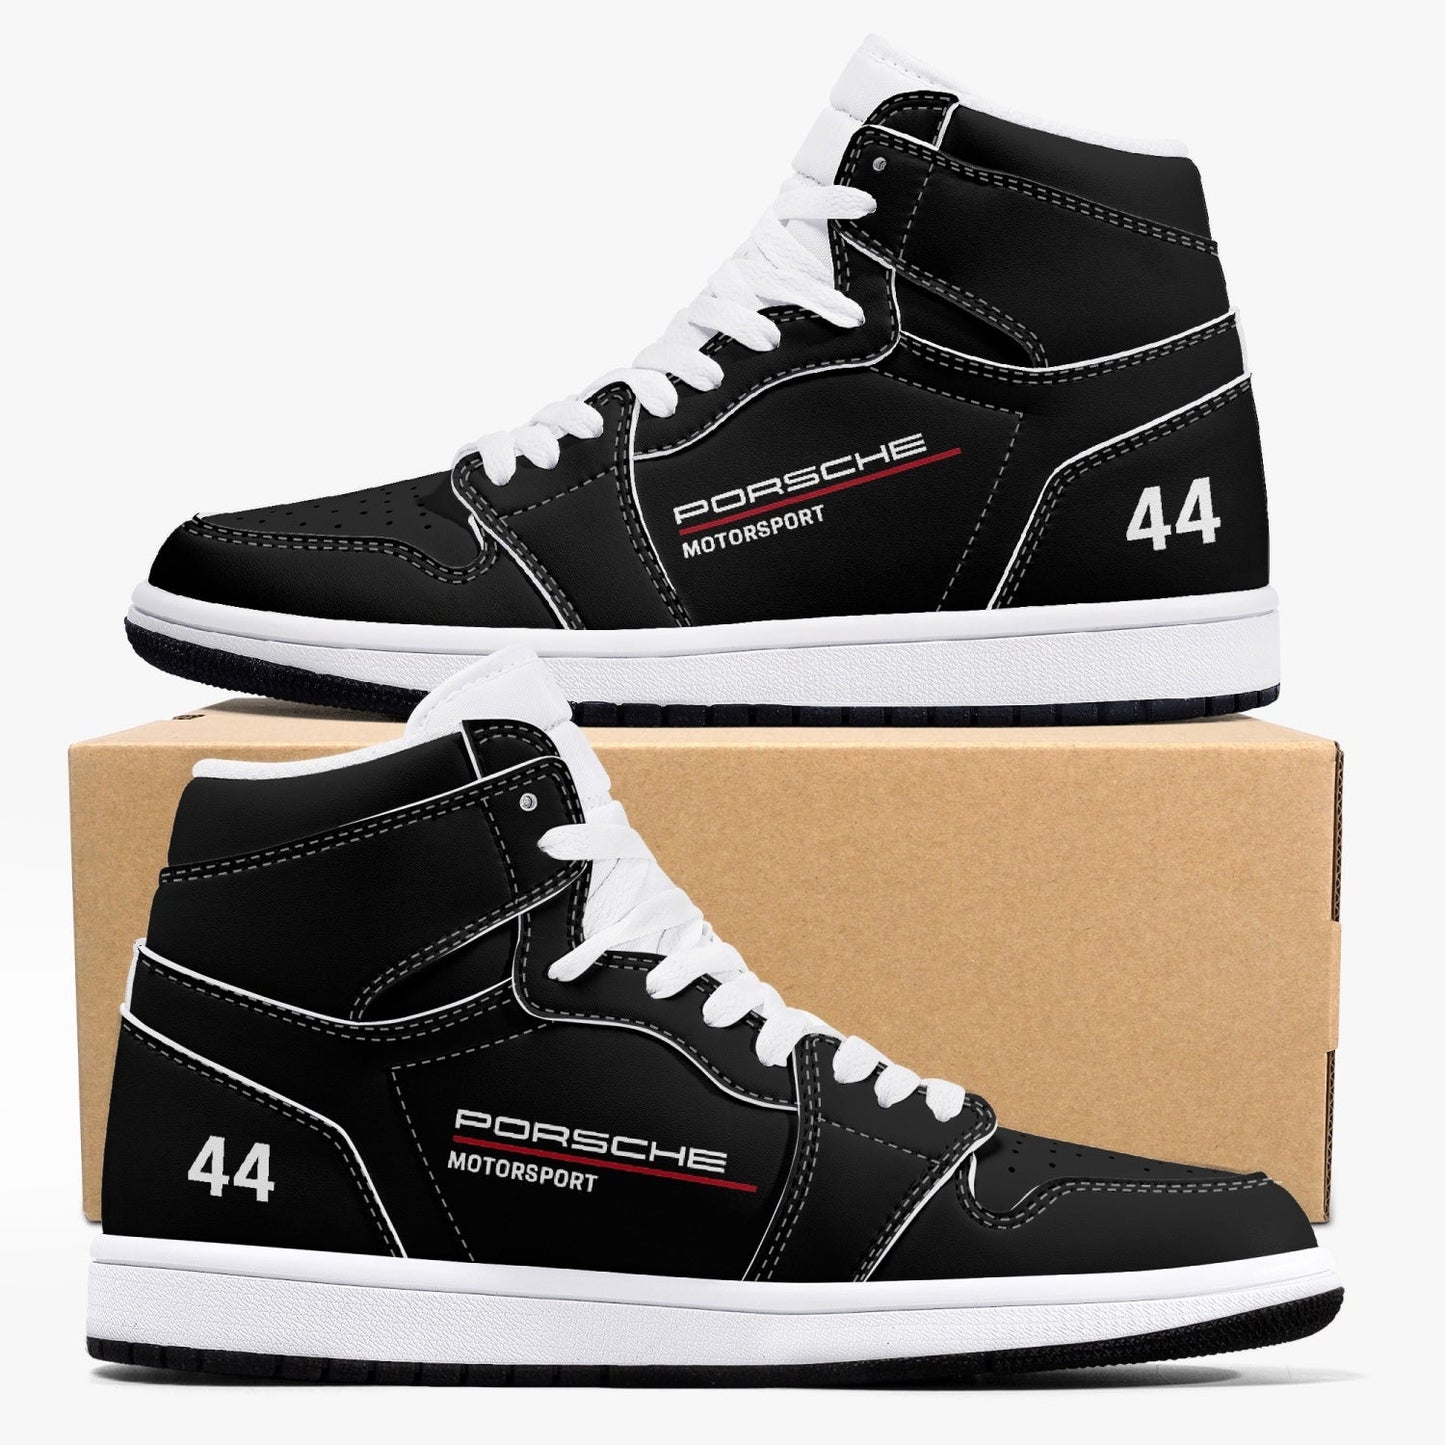 MARK VERDINO High-Top Leather Sneakers - carbon/white